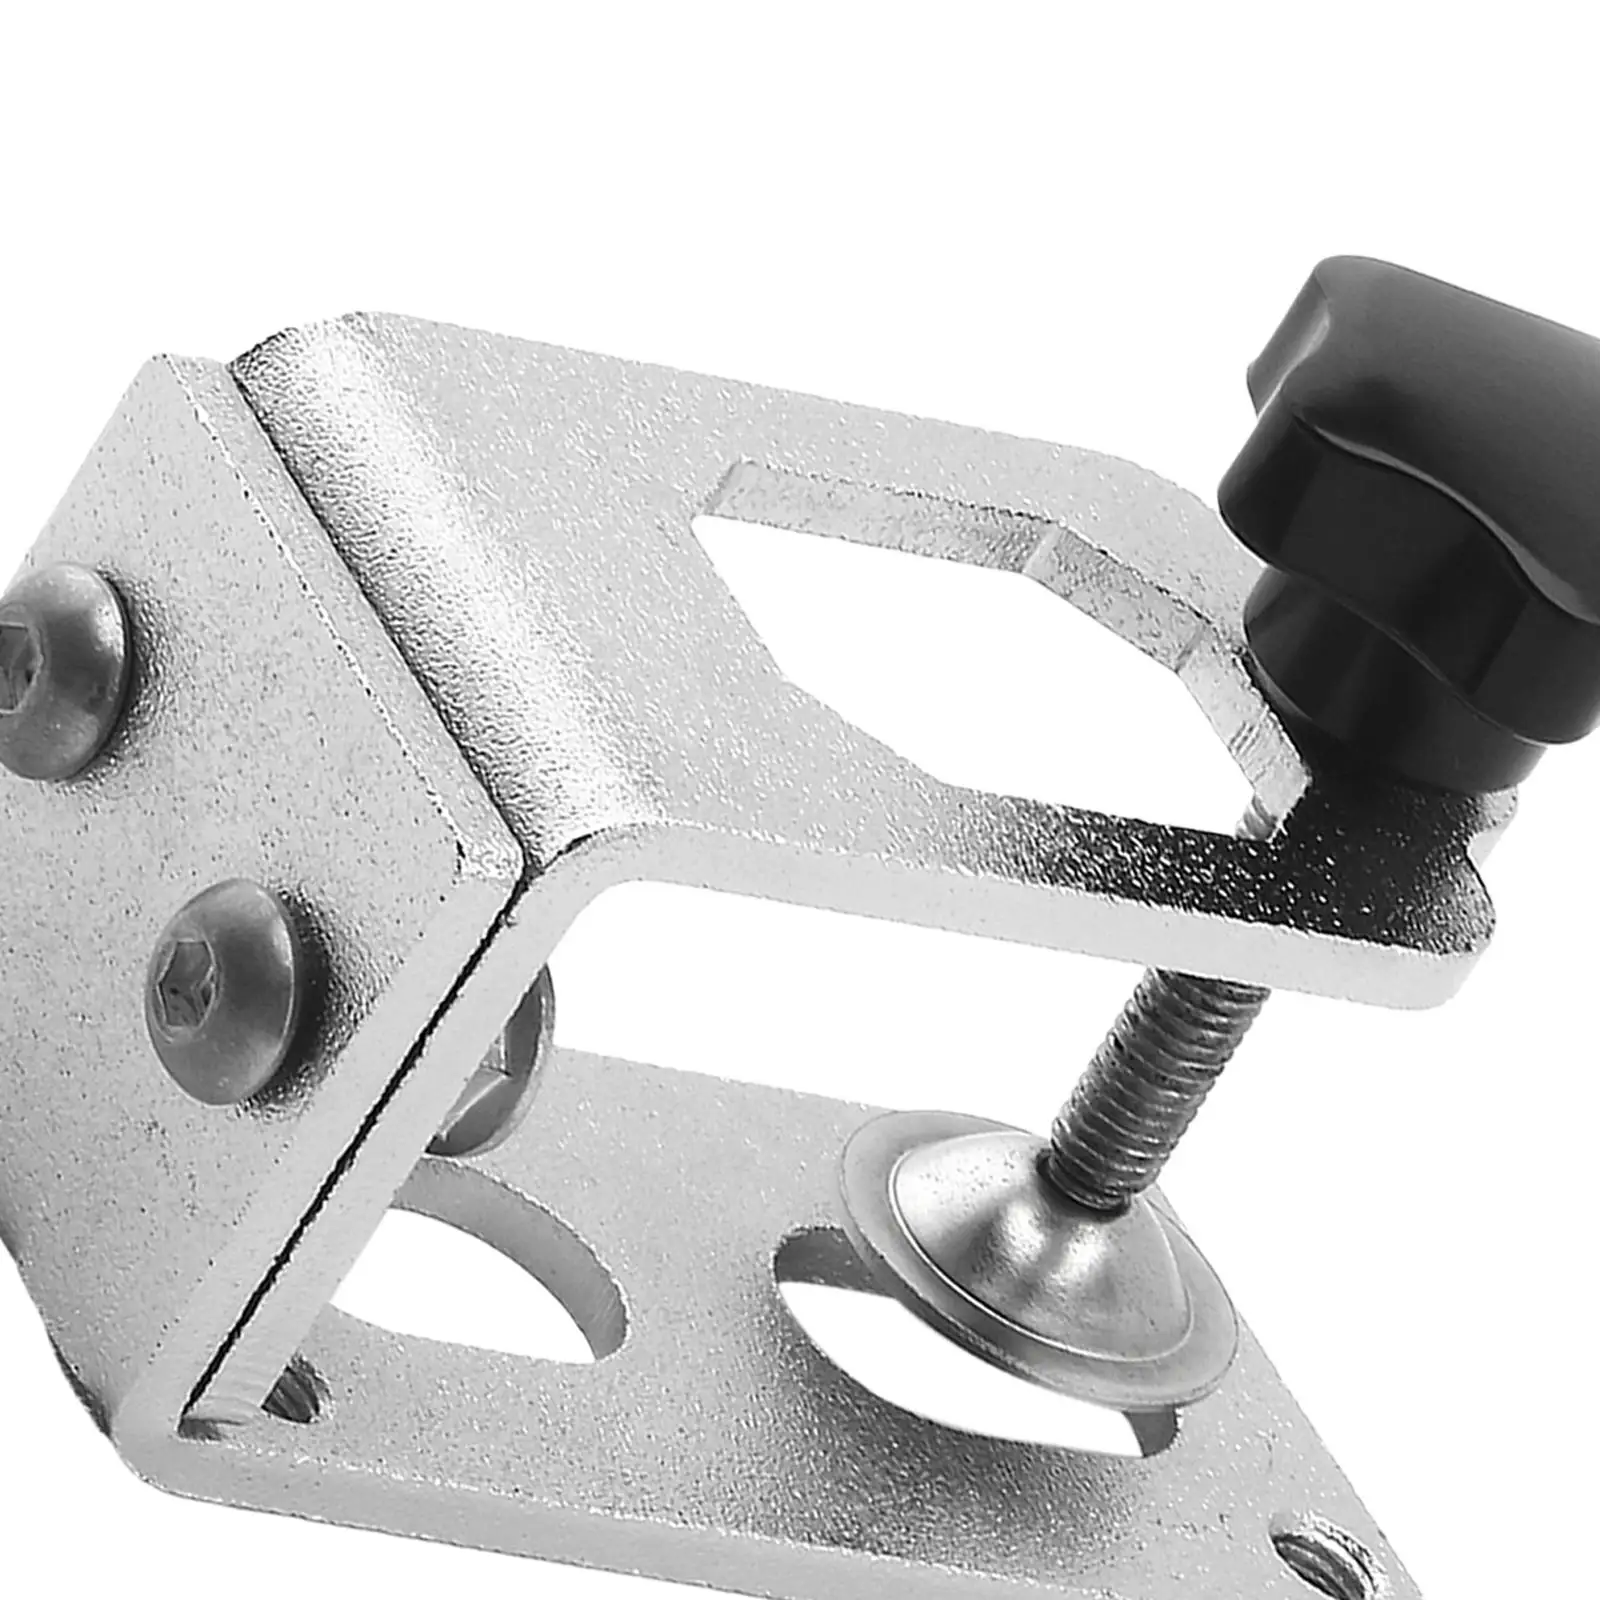 PC Sim USB Handbrake Clamp Replacement Parts for Truck racings Games